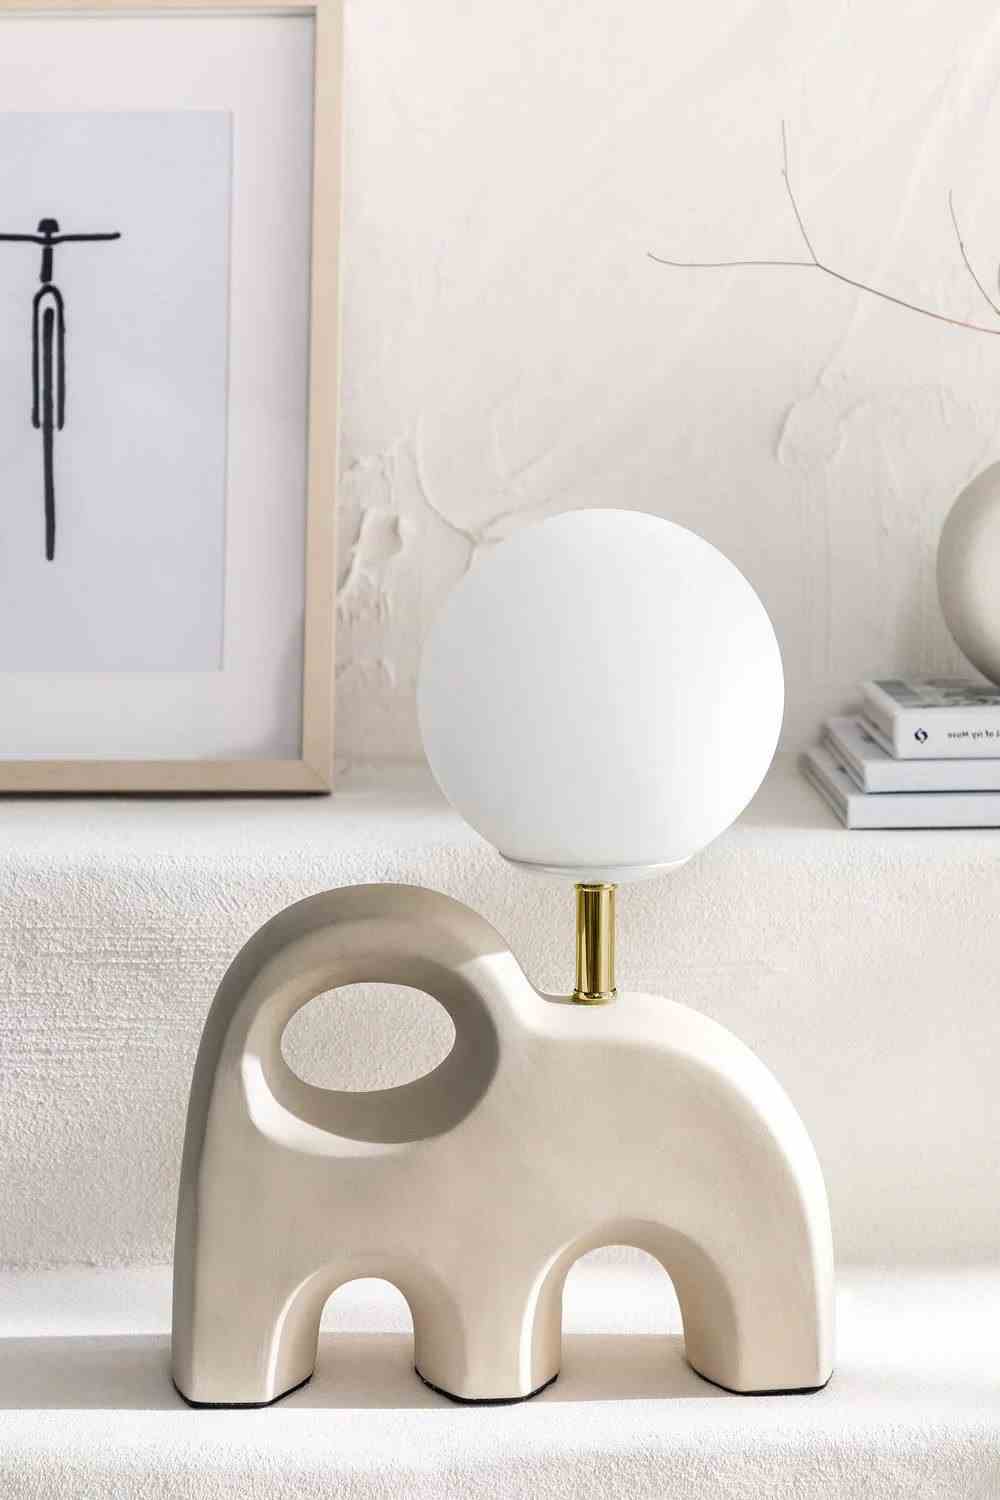 The Table Lamp Illuminates the Arty Interior 